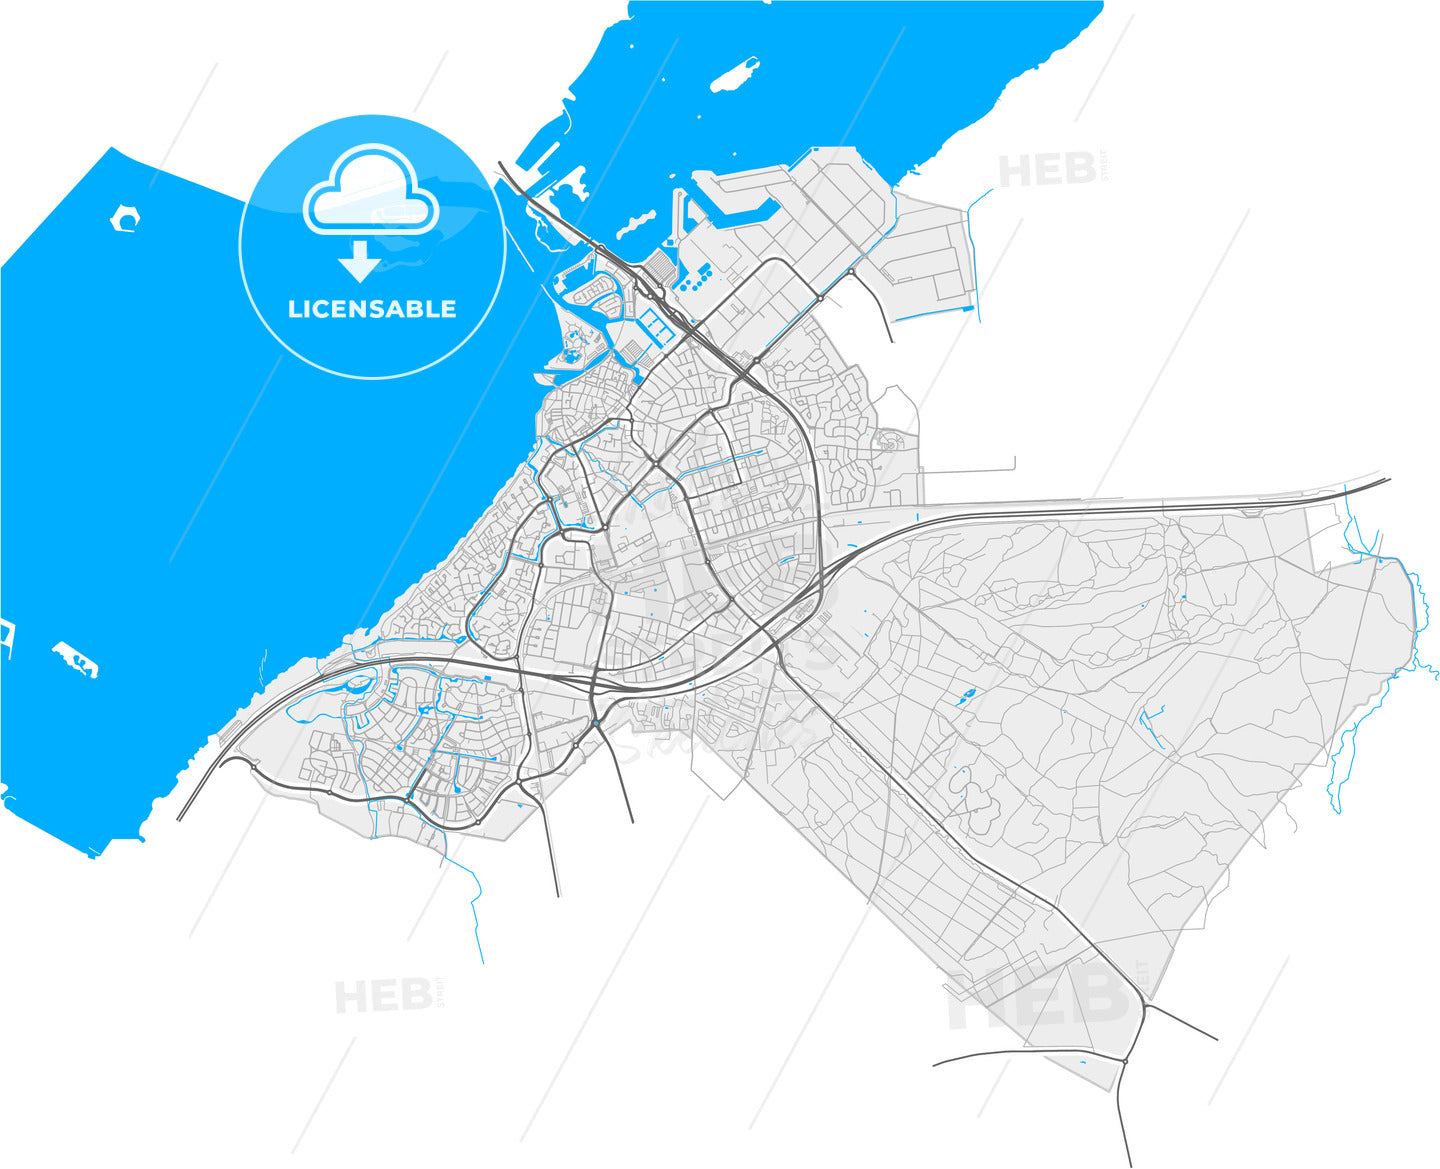 Harderwijk, Gelderland, Netherlands, high quality vector map